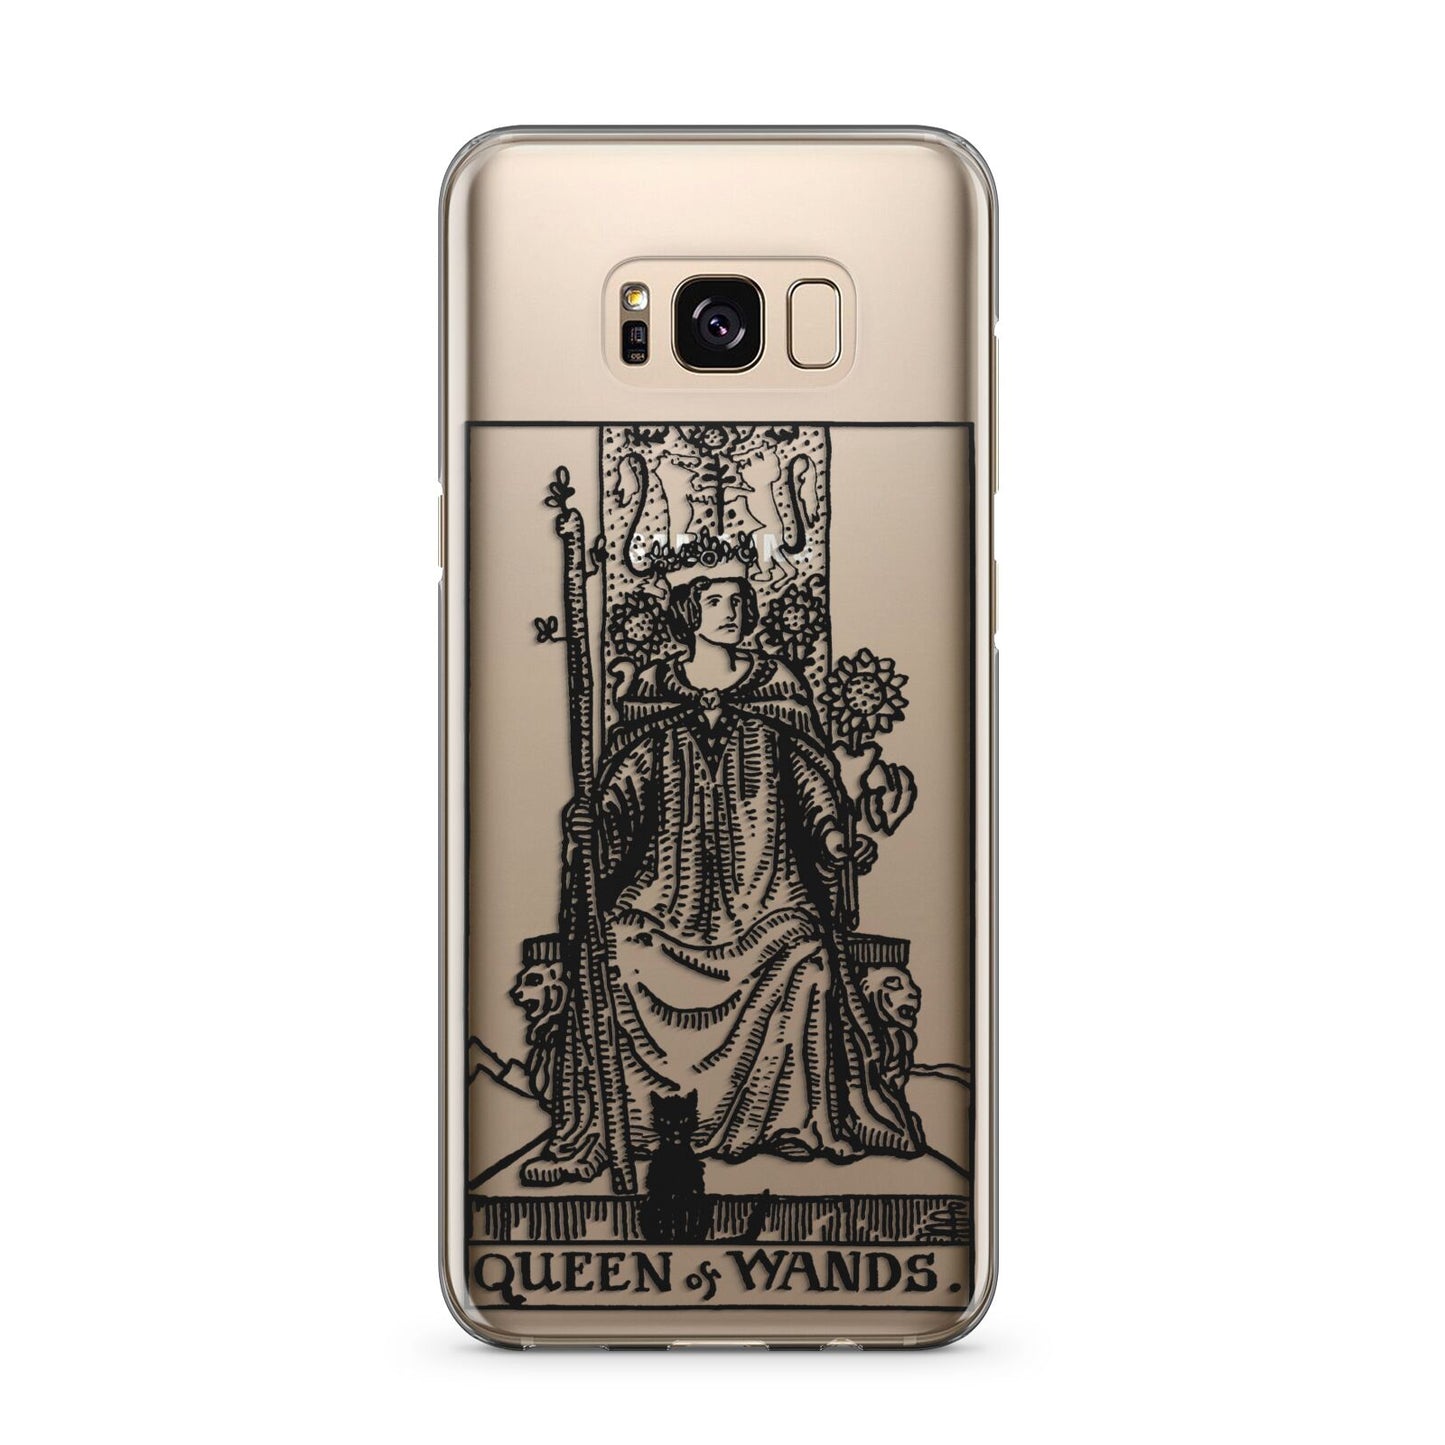 Queen of Wands Monochrome Samsung Galaxy S8 Plus Case